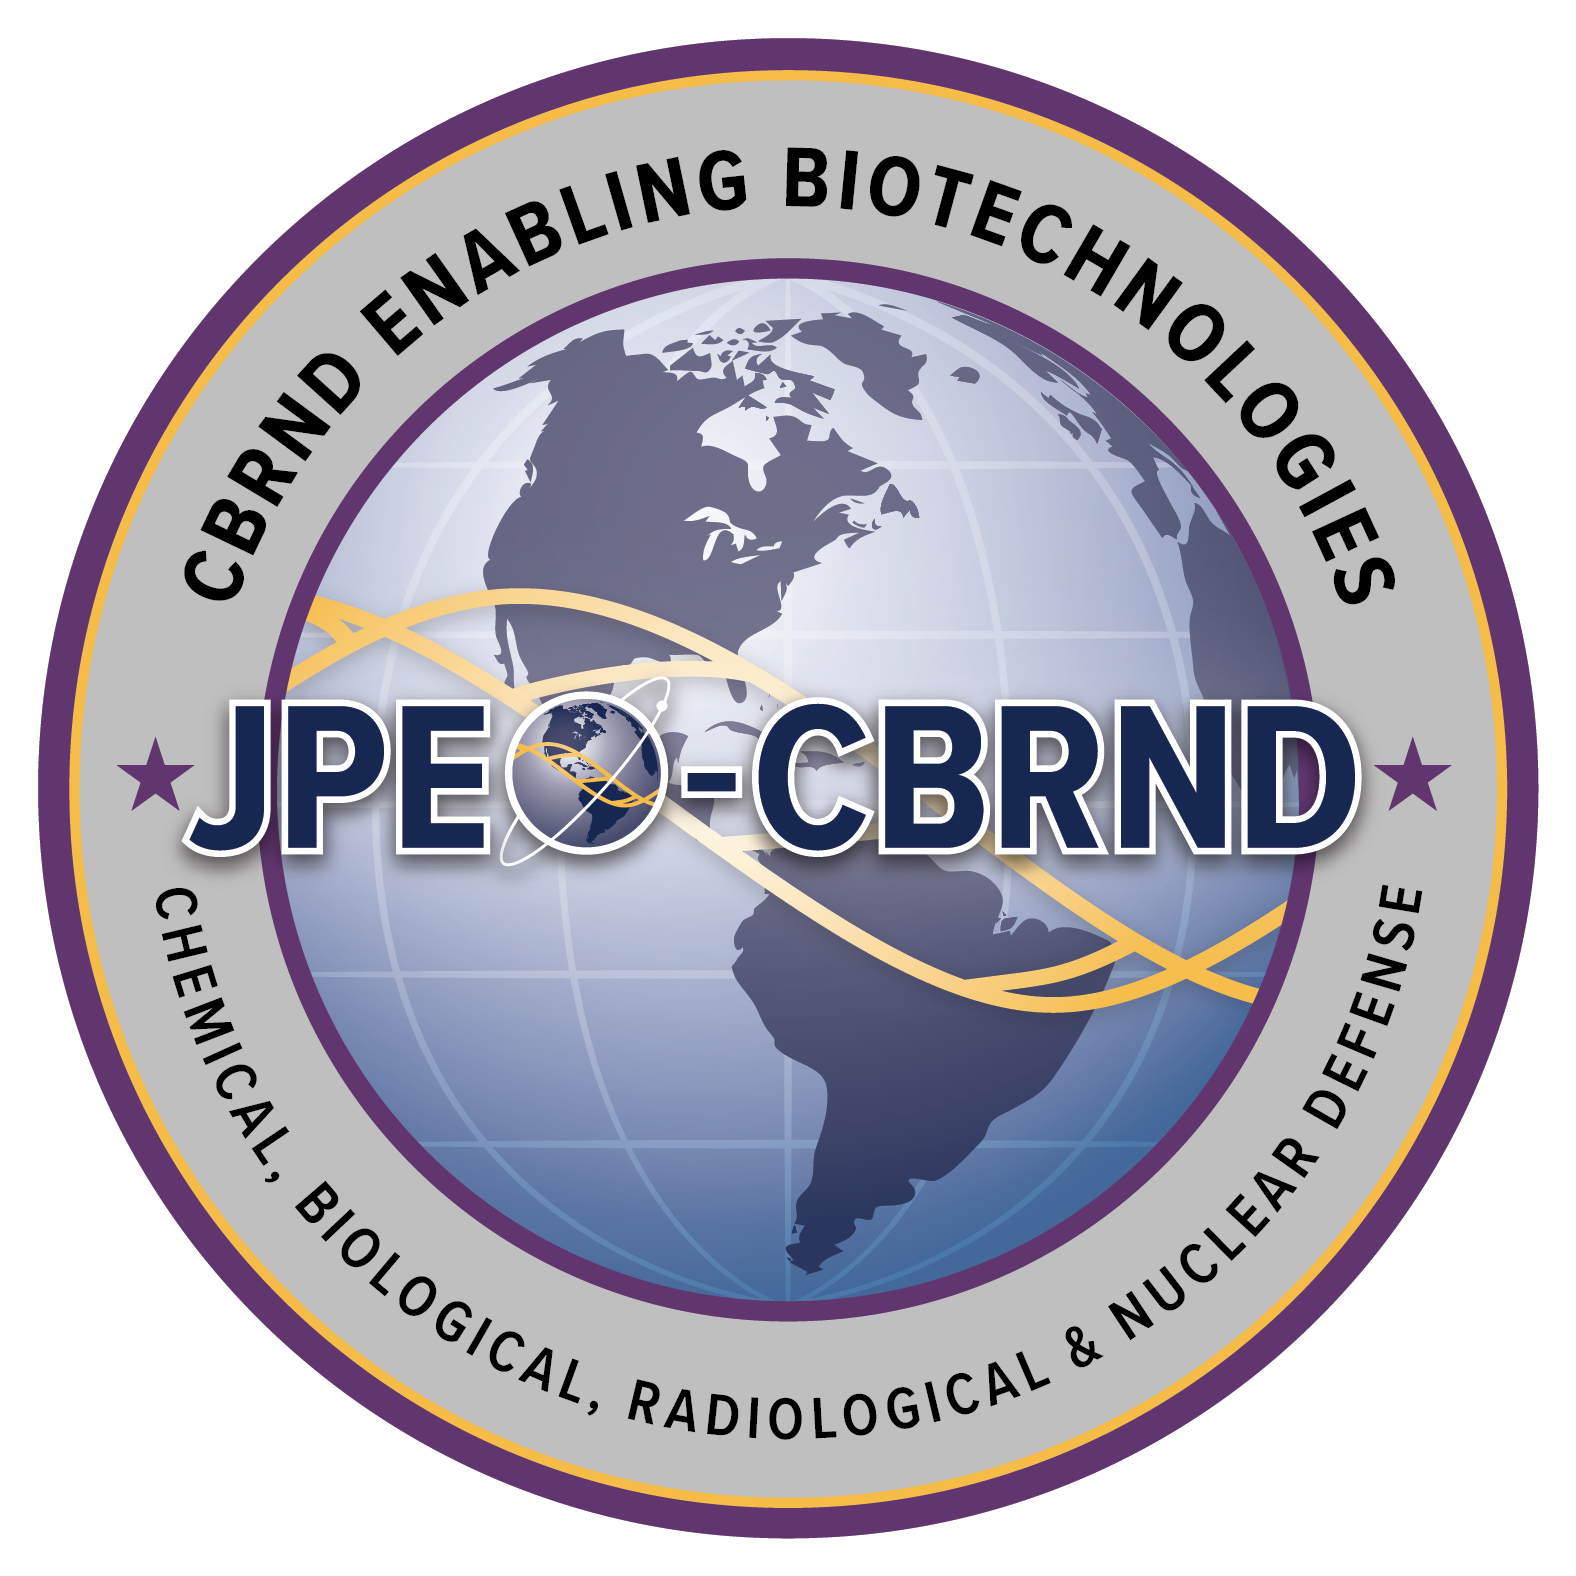 JPL CBRND Enabling Biotechnologies (EB)